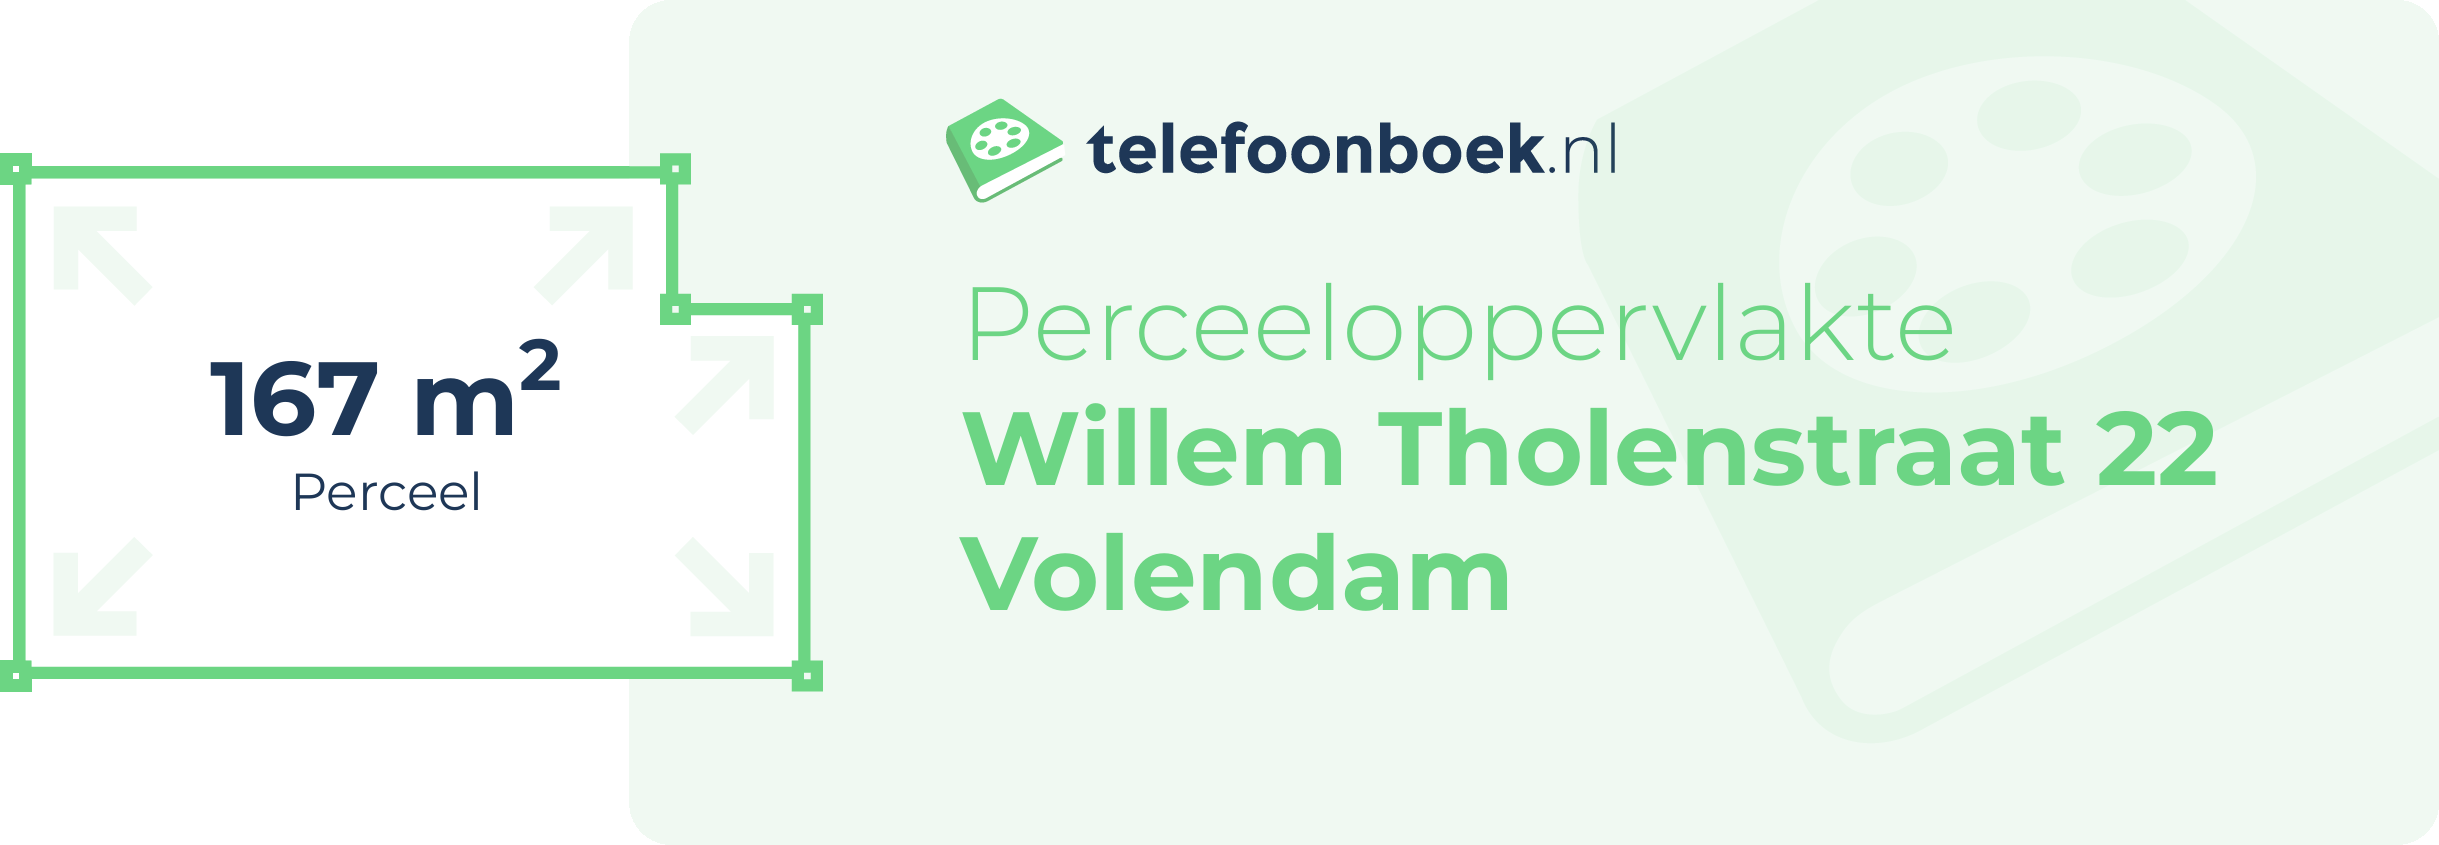 Perceeloppervlakte Willem Tholenstraat 22 Volendam